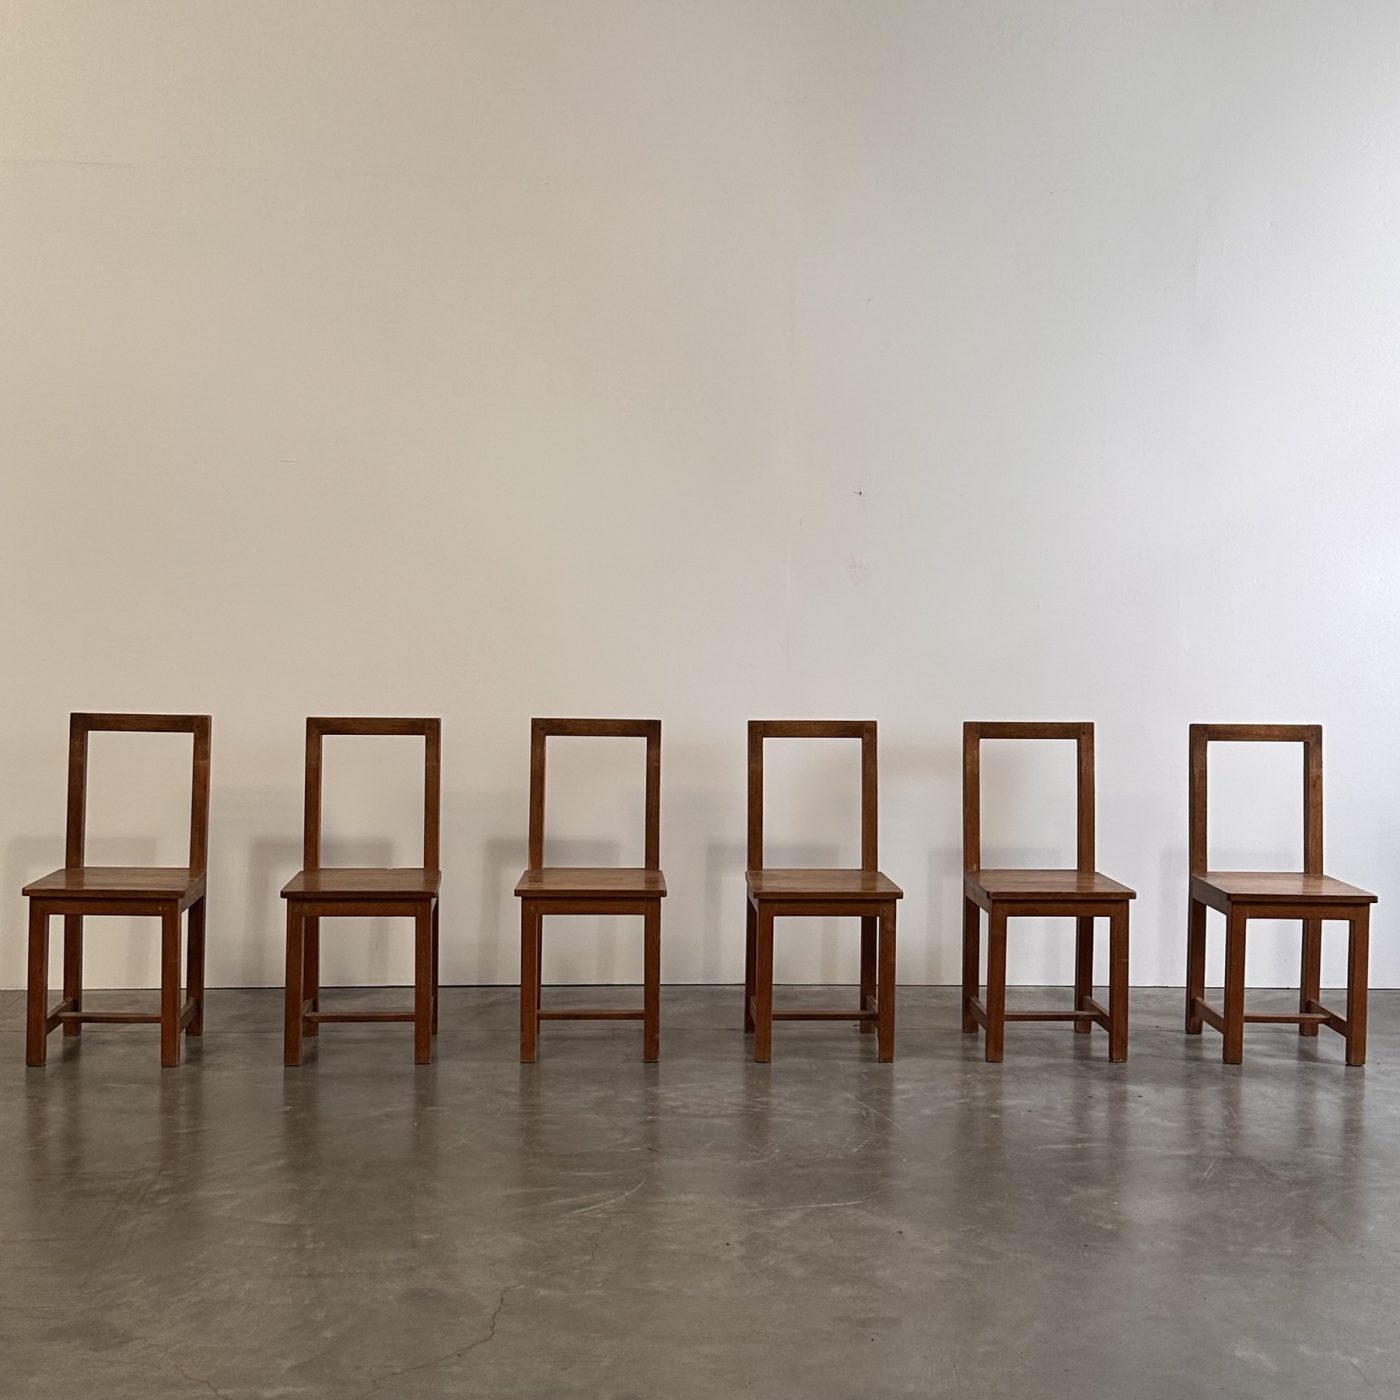 objet-vagabond-simple-chairs0003